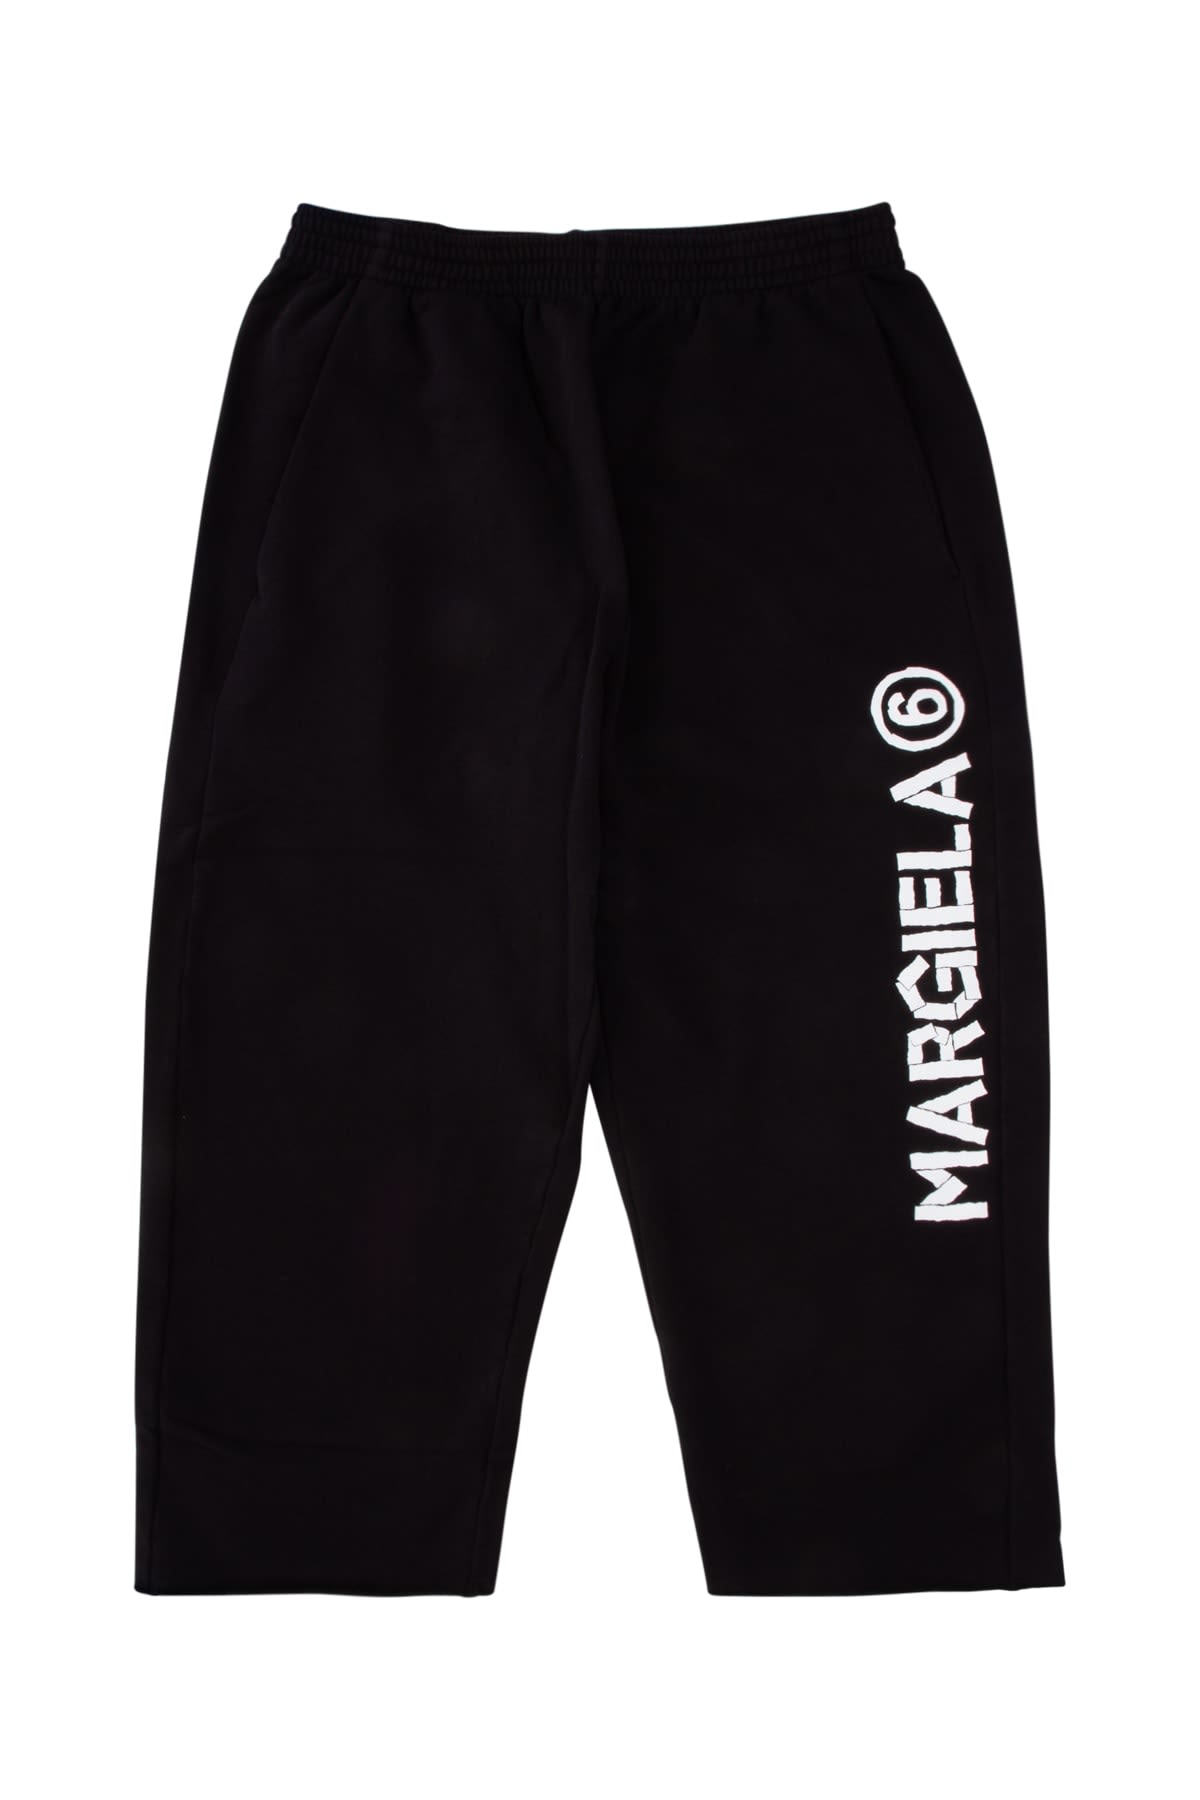 Shop Mm6 Maison Margiela Pantalone In M6900